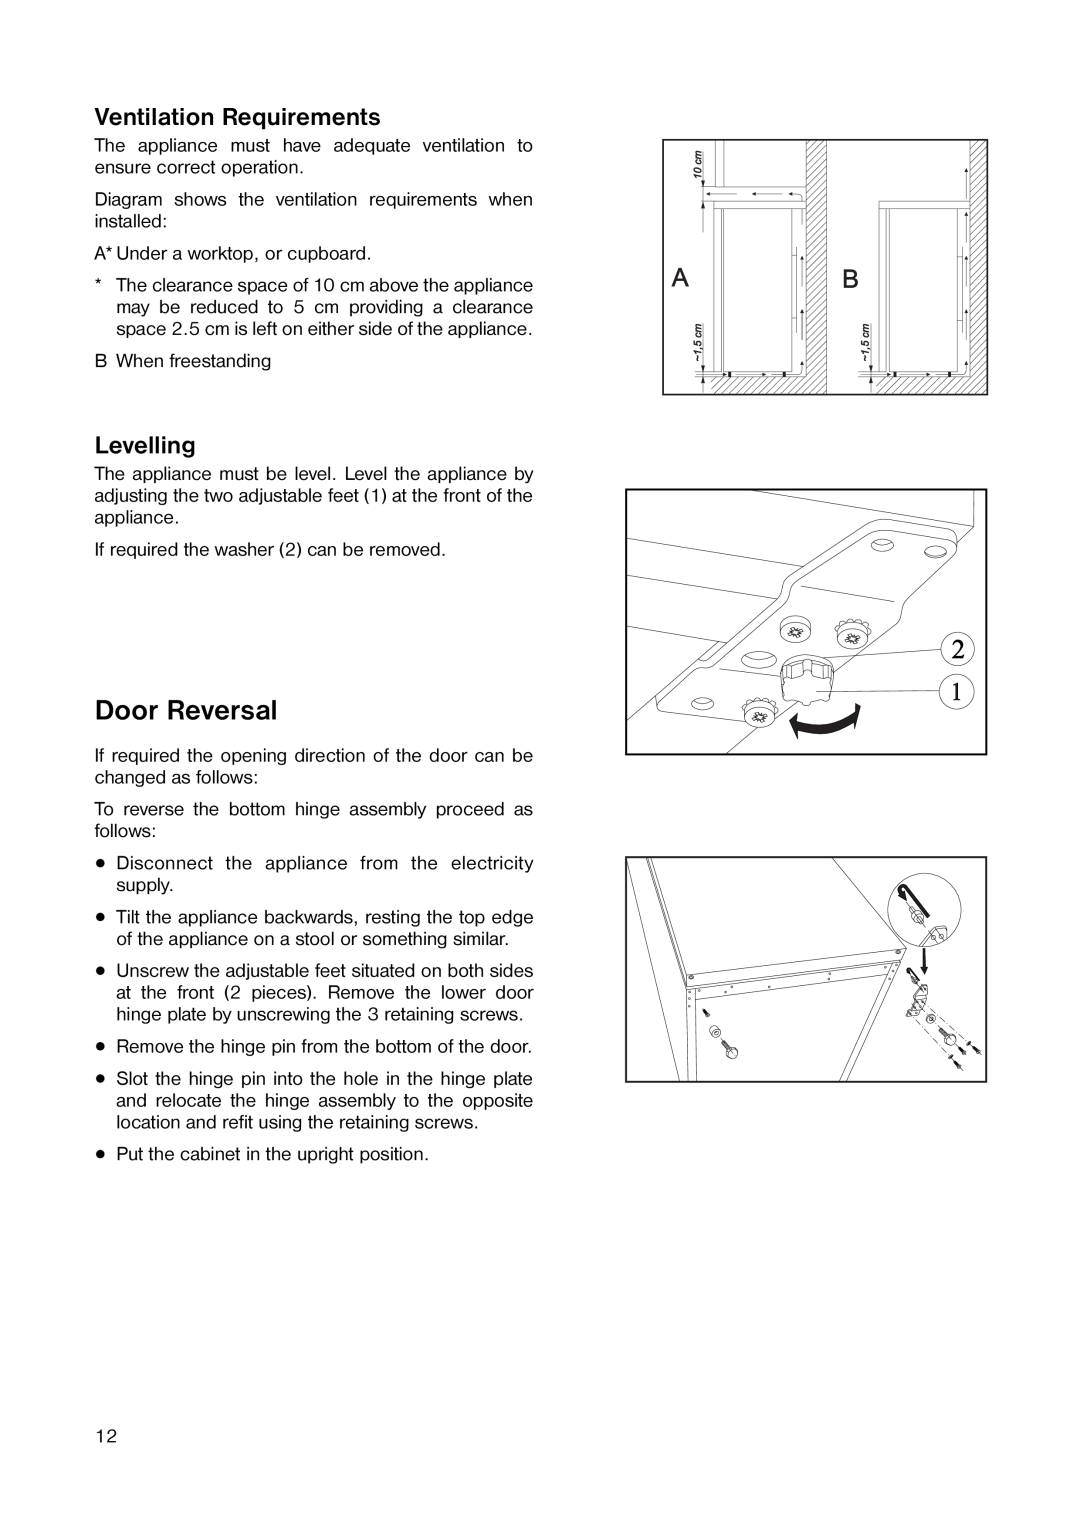 Zanussi ZCL 56 manual Door Reversal, Ventilation Requirements, Levelling 